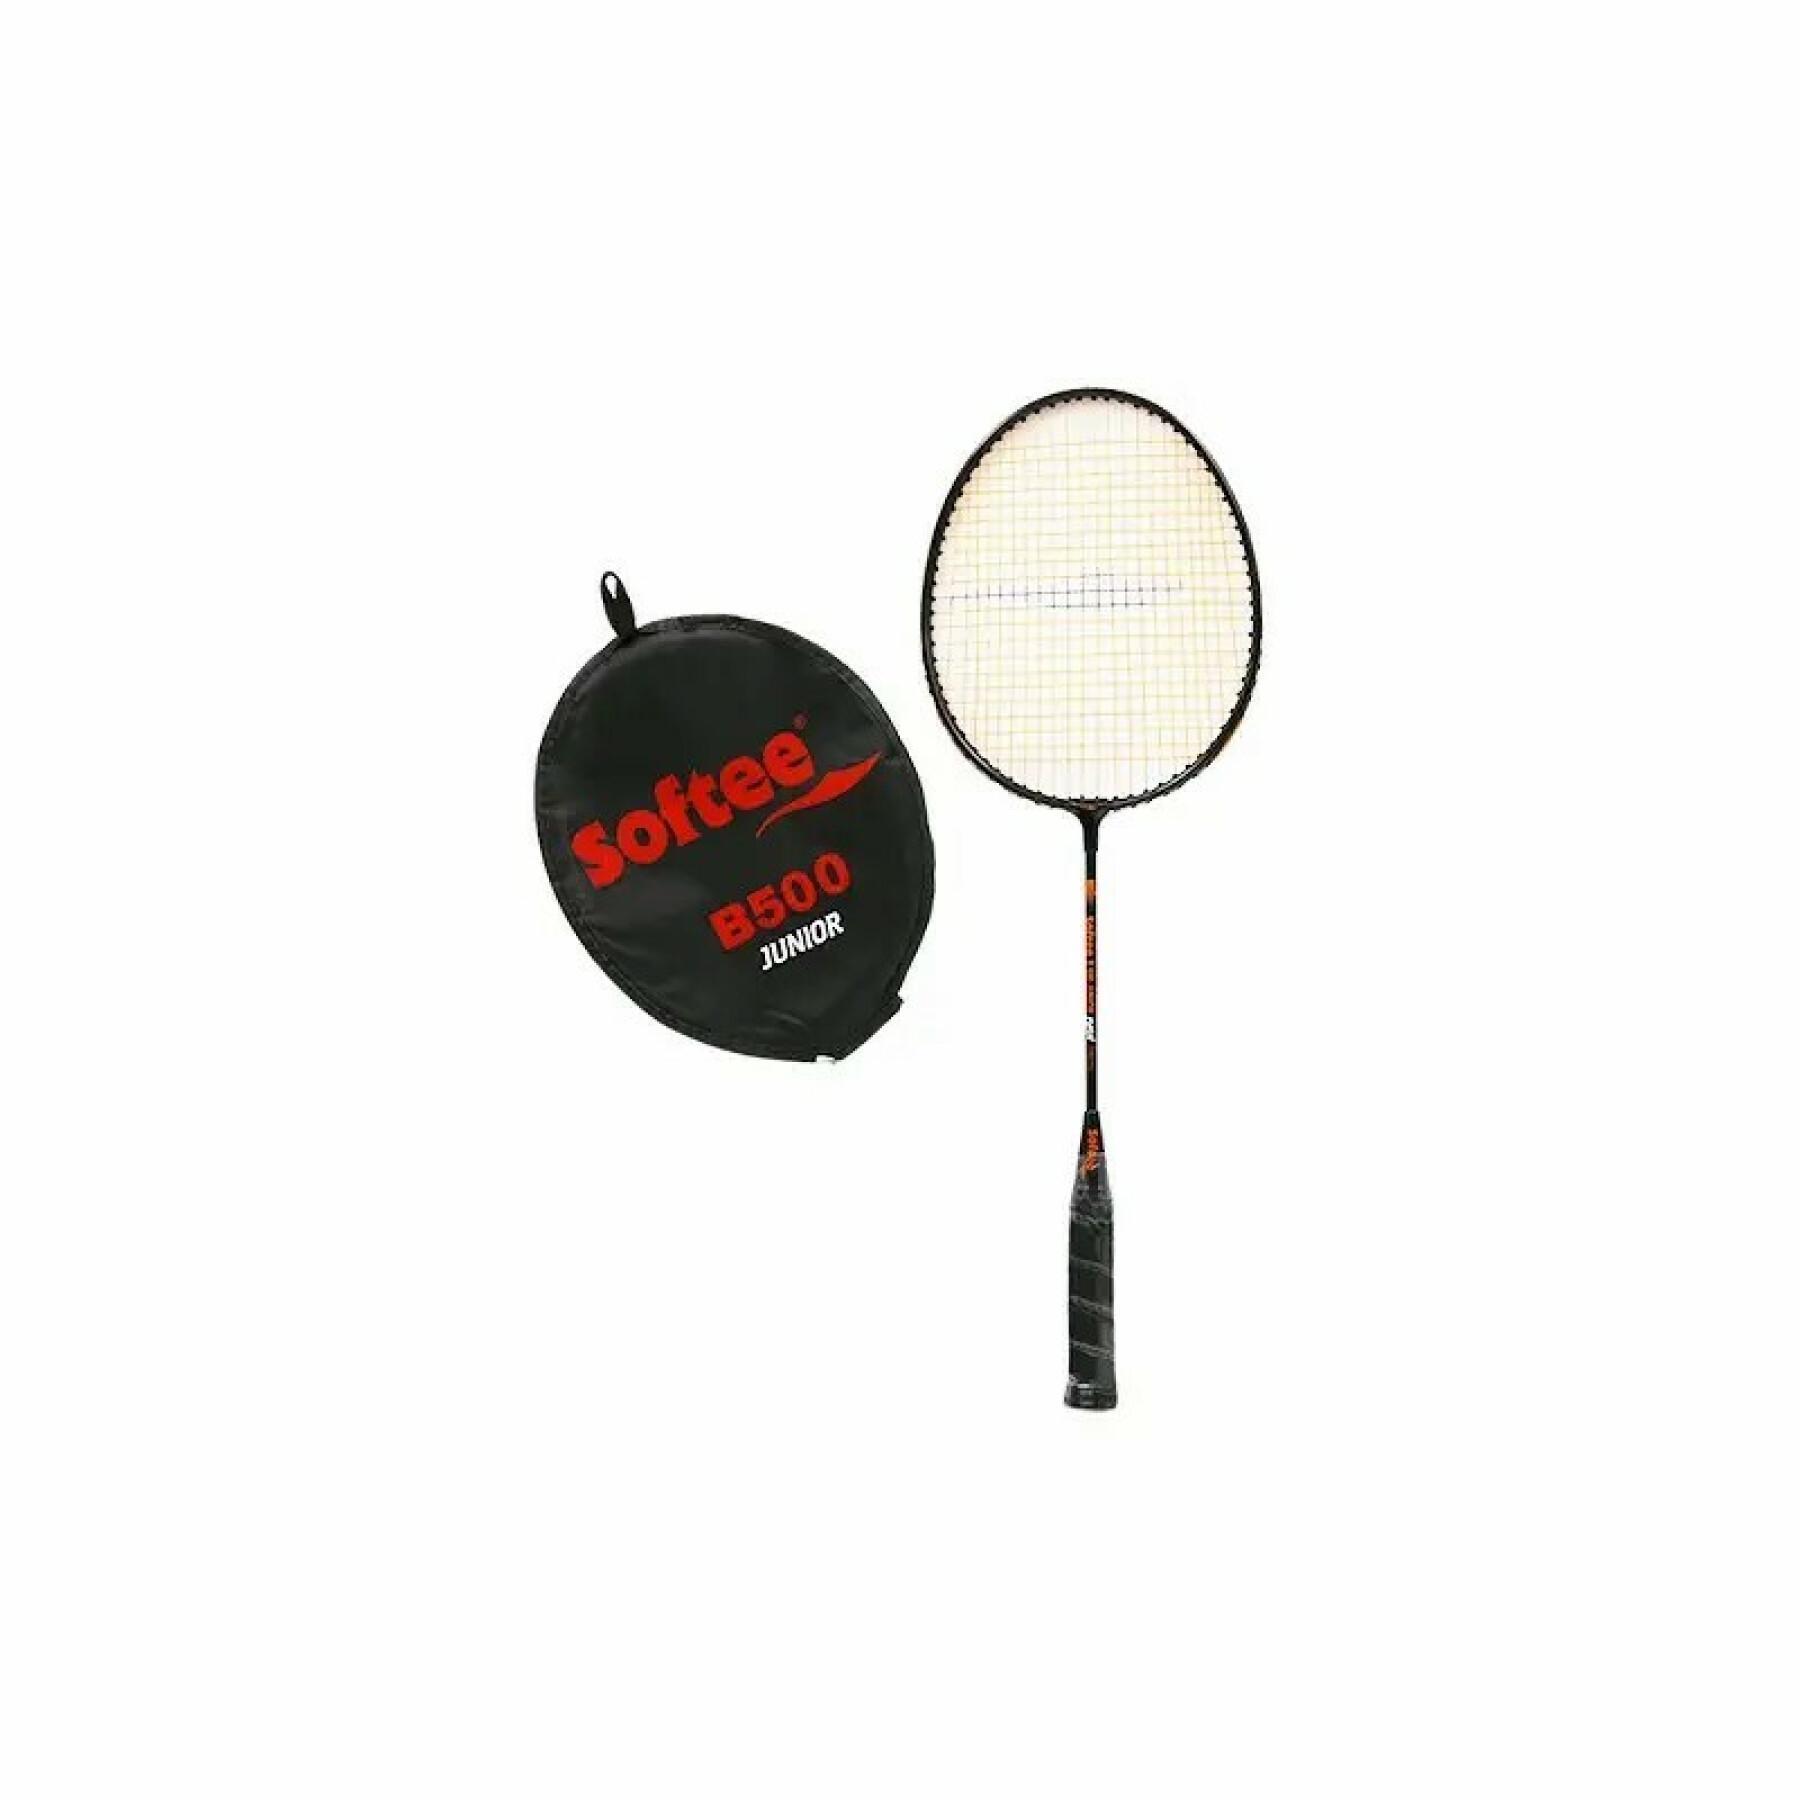 Badminton racket for kids Softee B 500